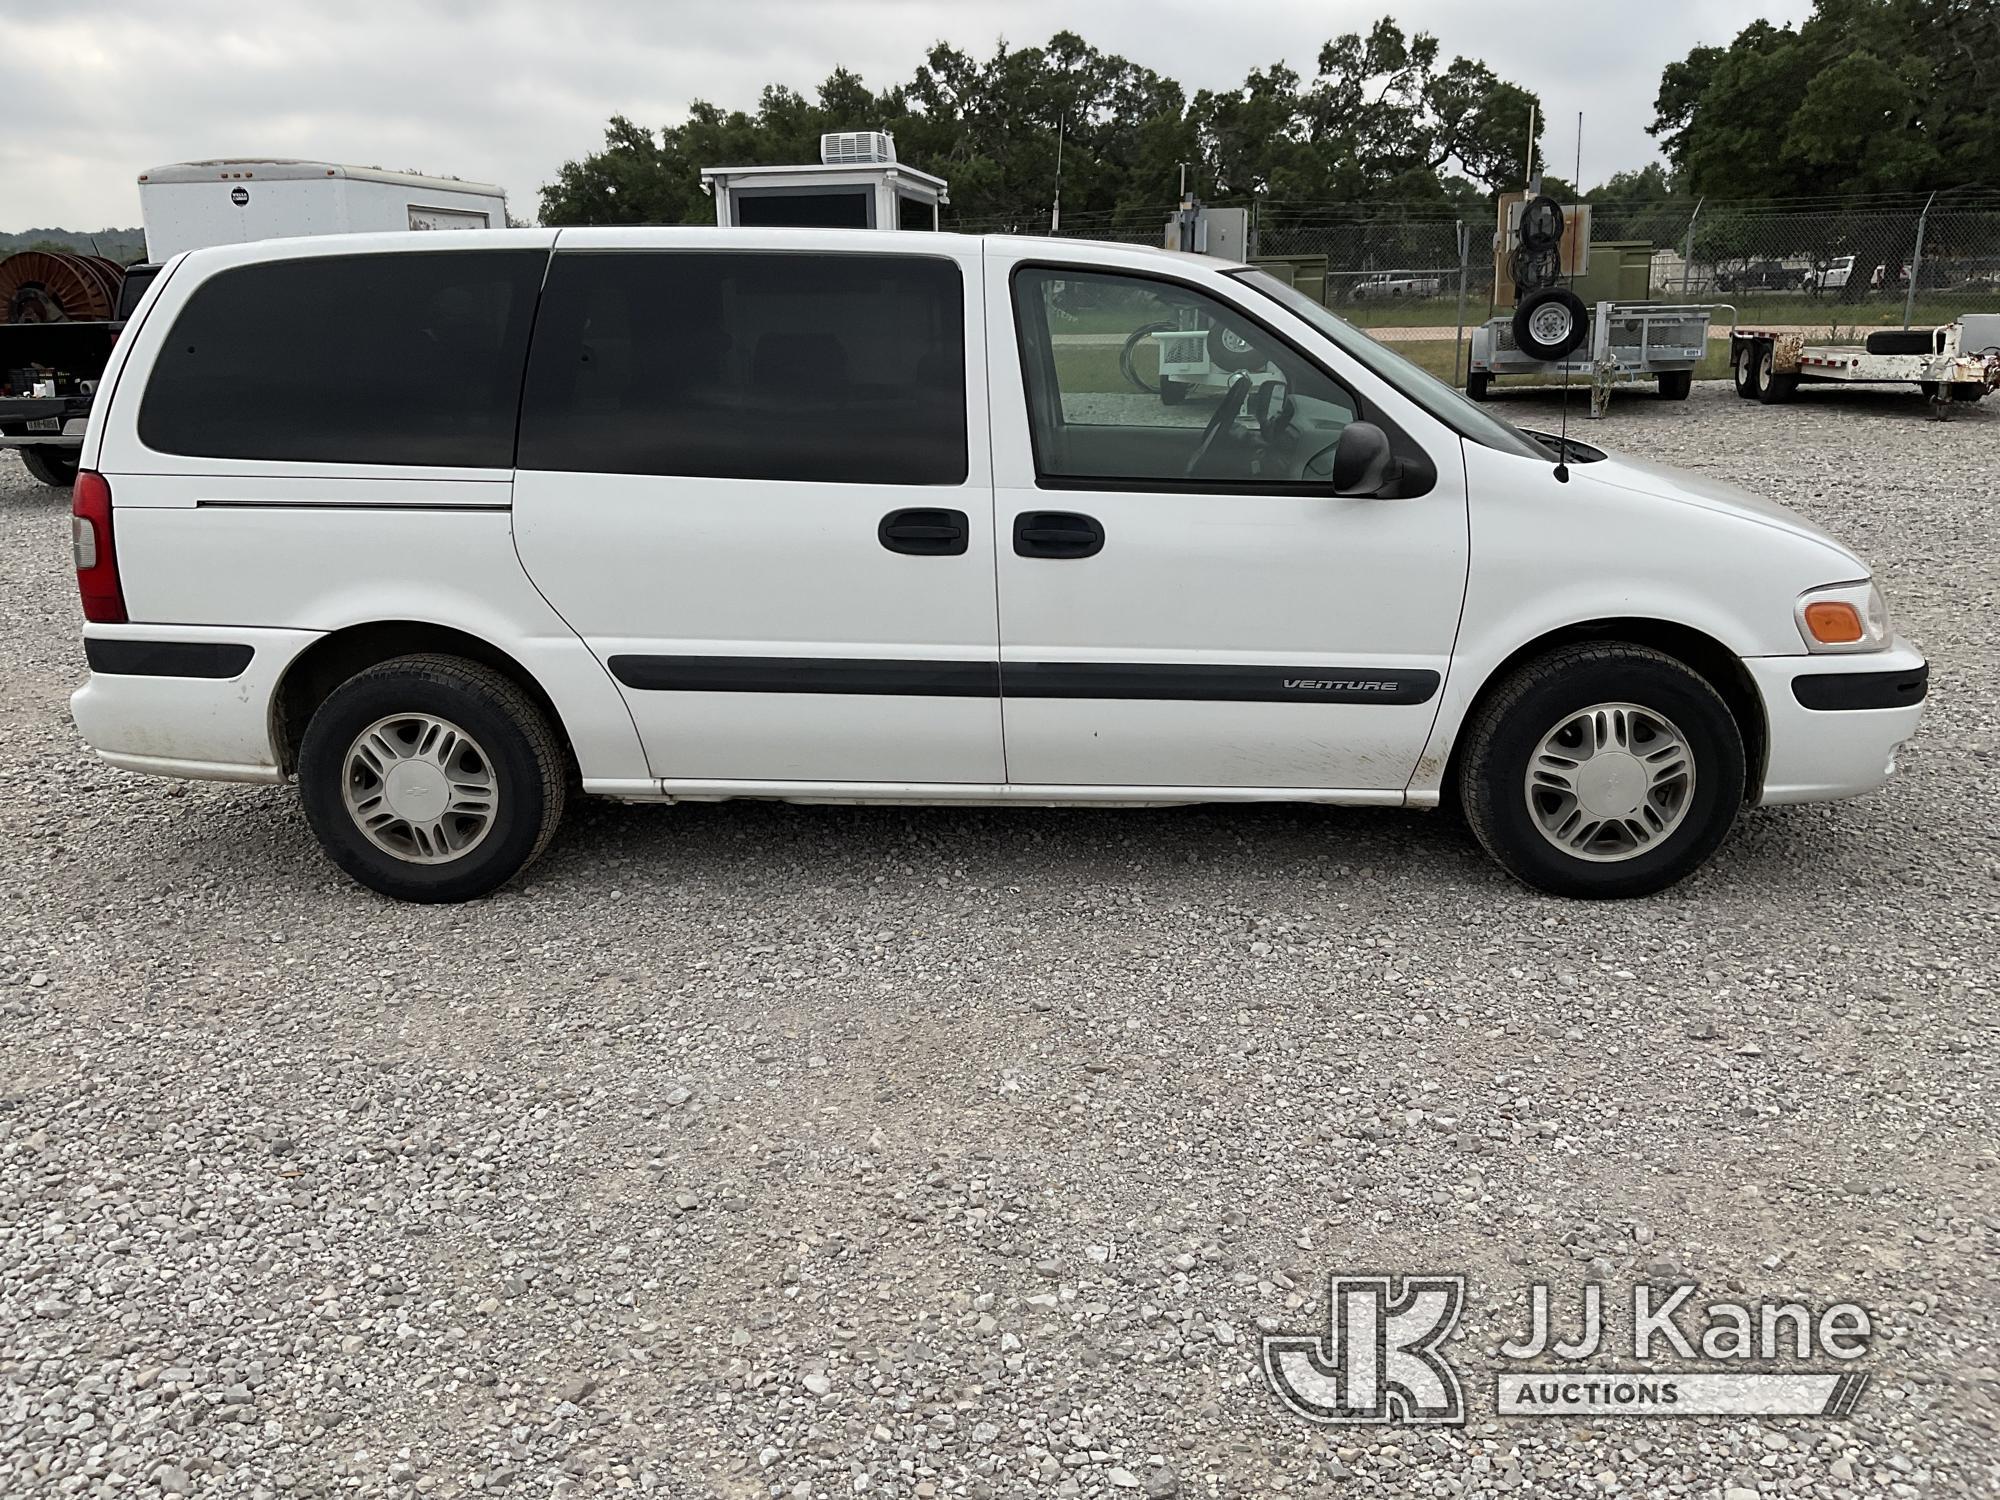 (Johnson City, TX) 2004 Chevrolet Venture Mini Passenger Van, , Cooperative owned and maintained Run